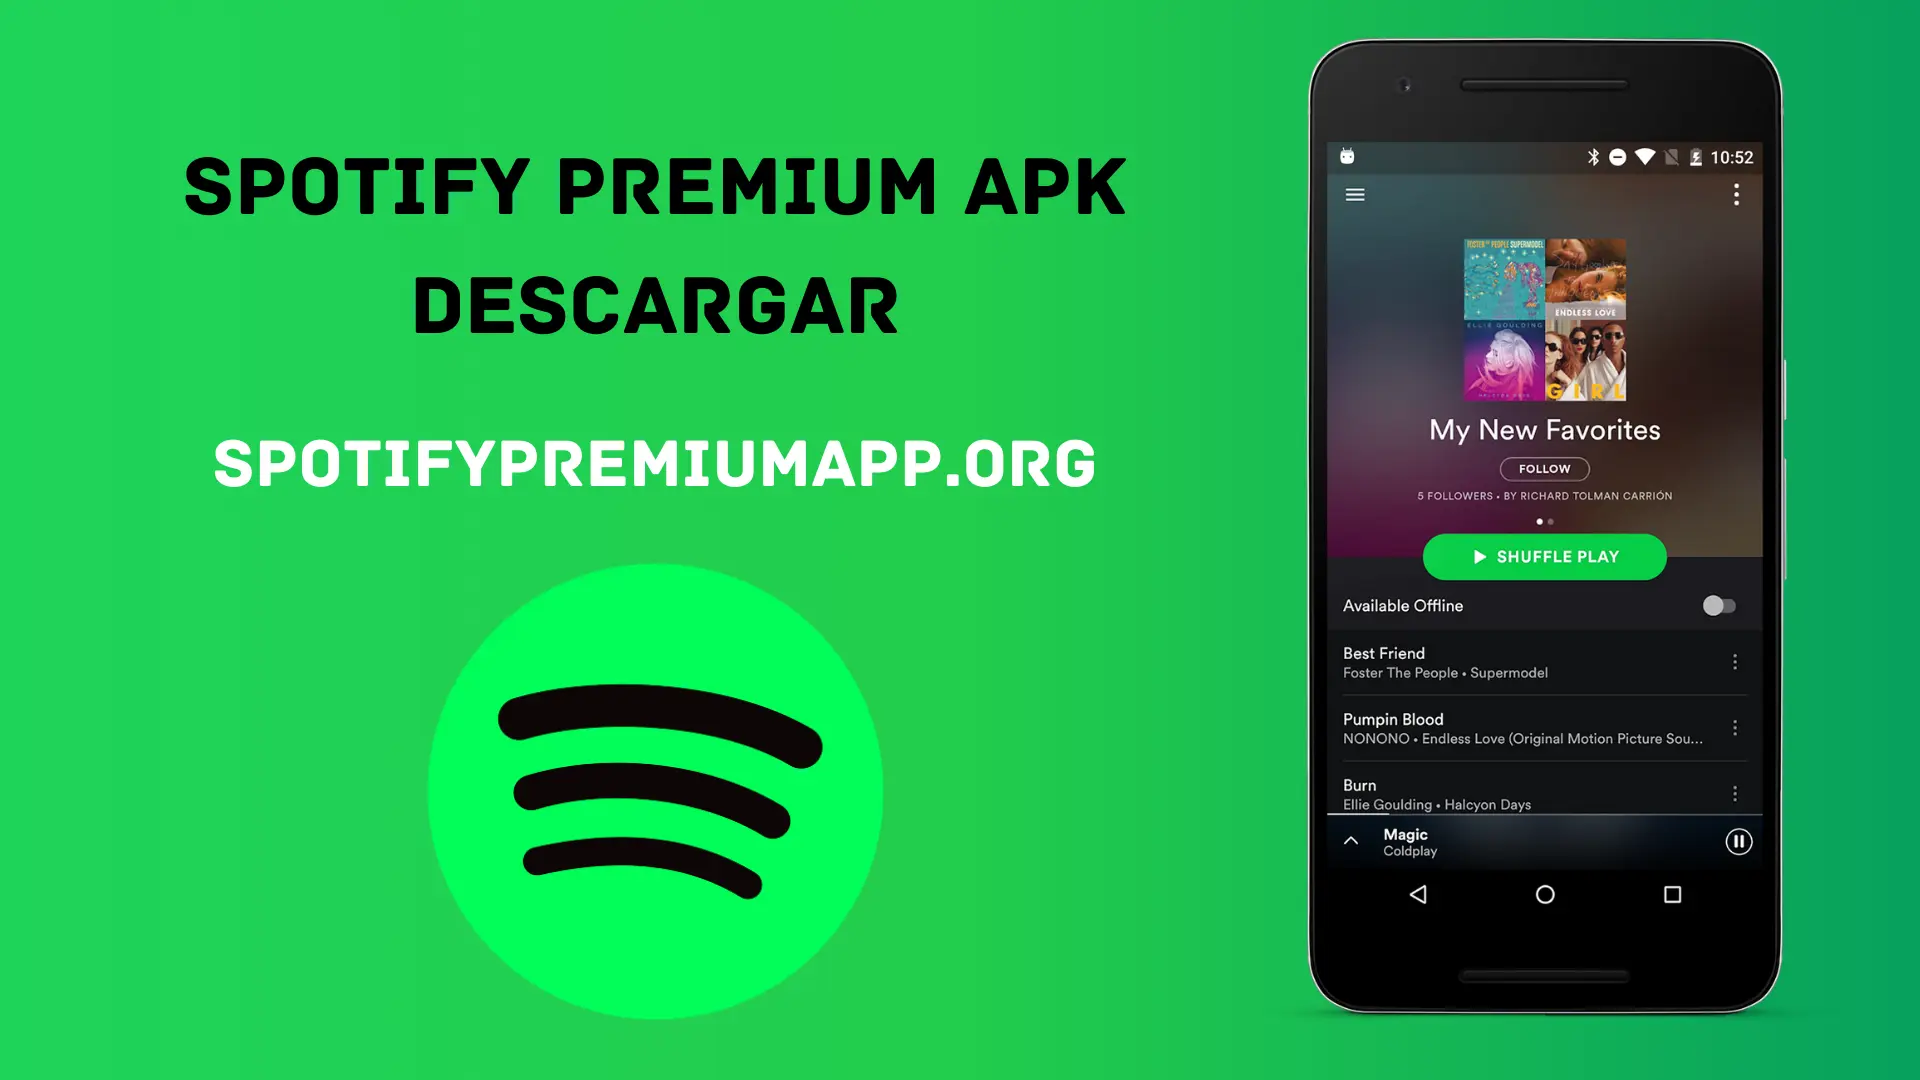 Spotify premium APK